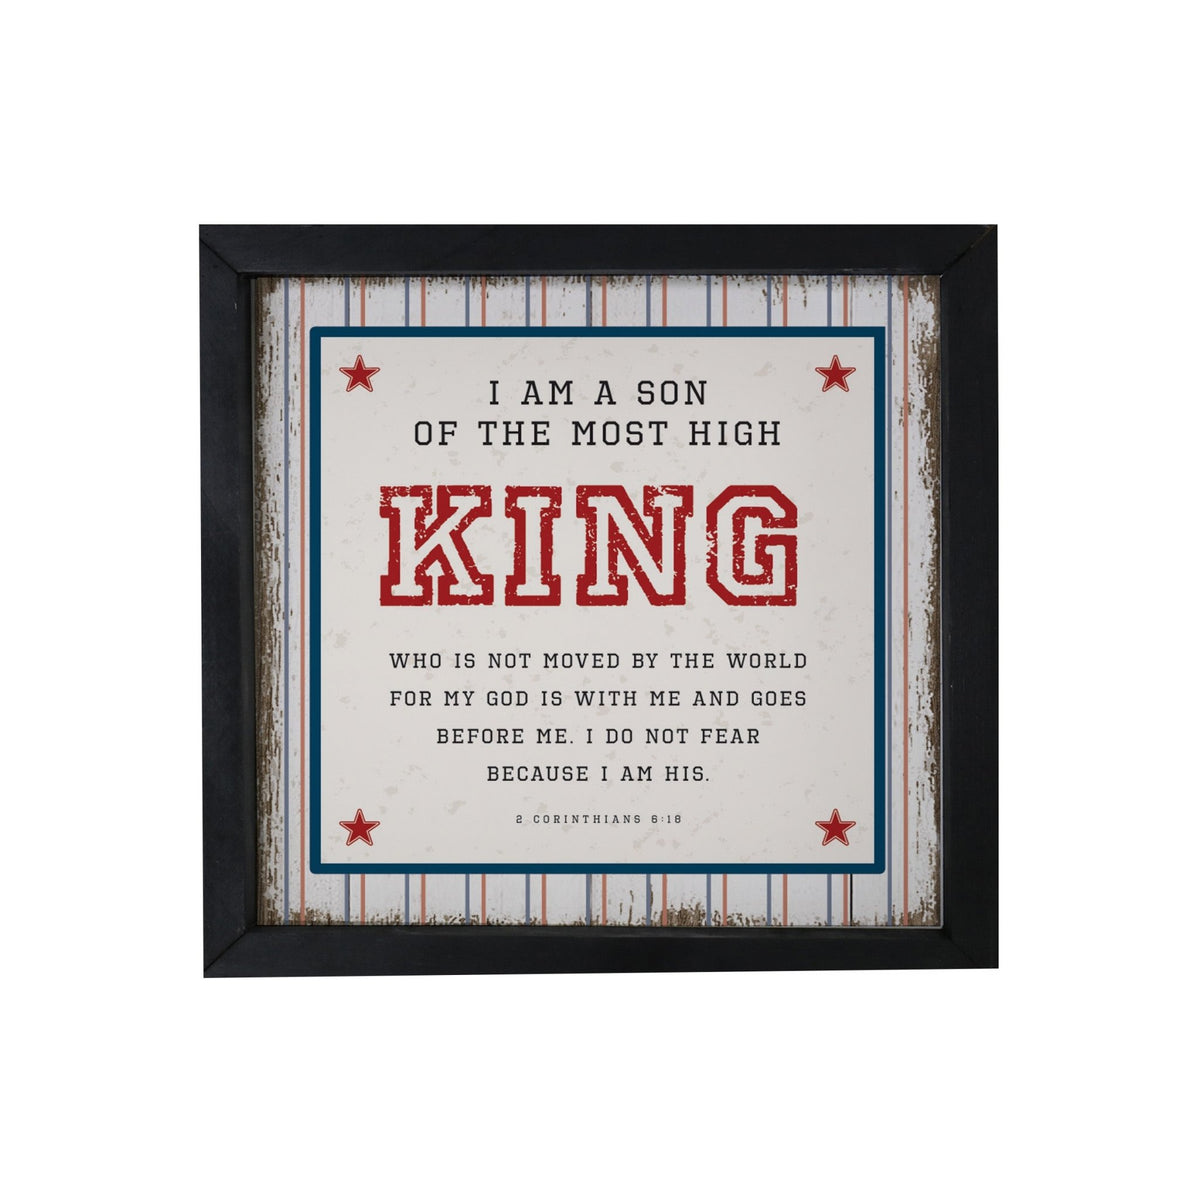 Elegant Baseball Framed Shadow Box Shelf Décor With Inspiring Bible Verses - King - LifeSong Milestones